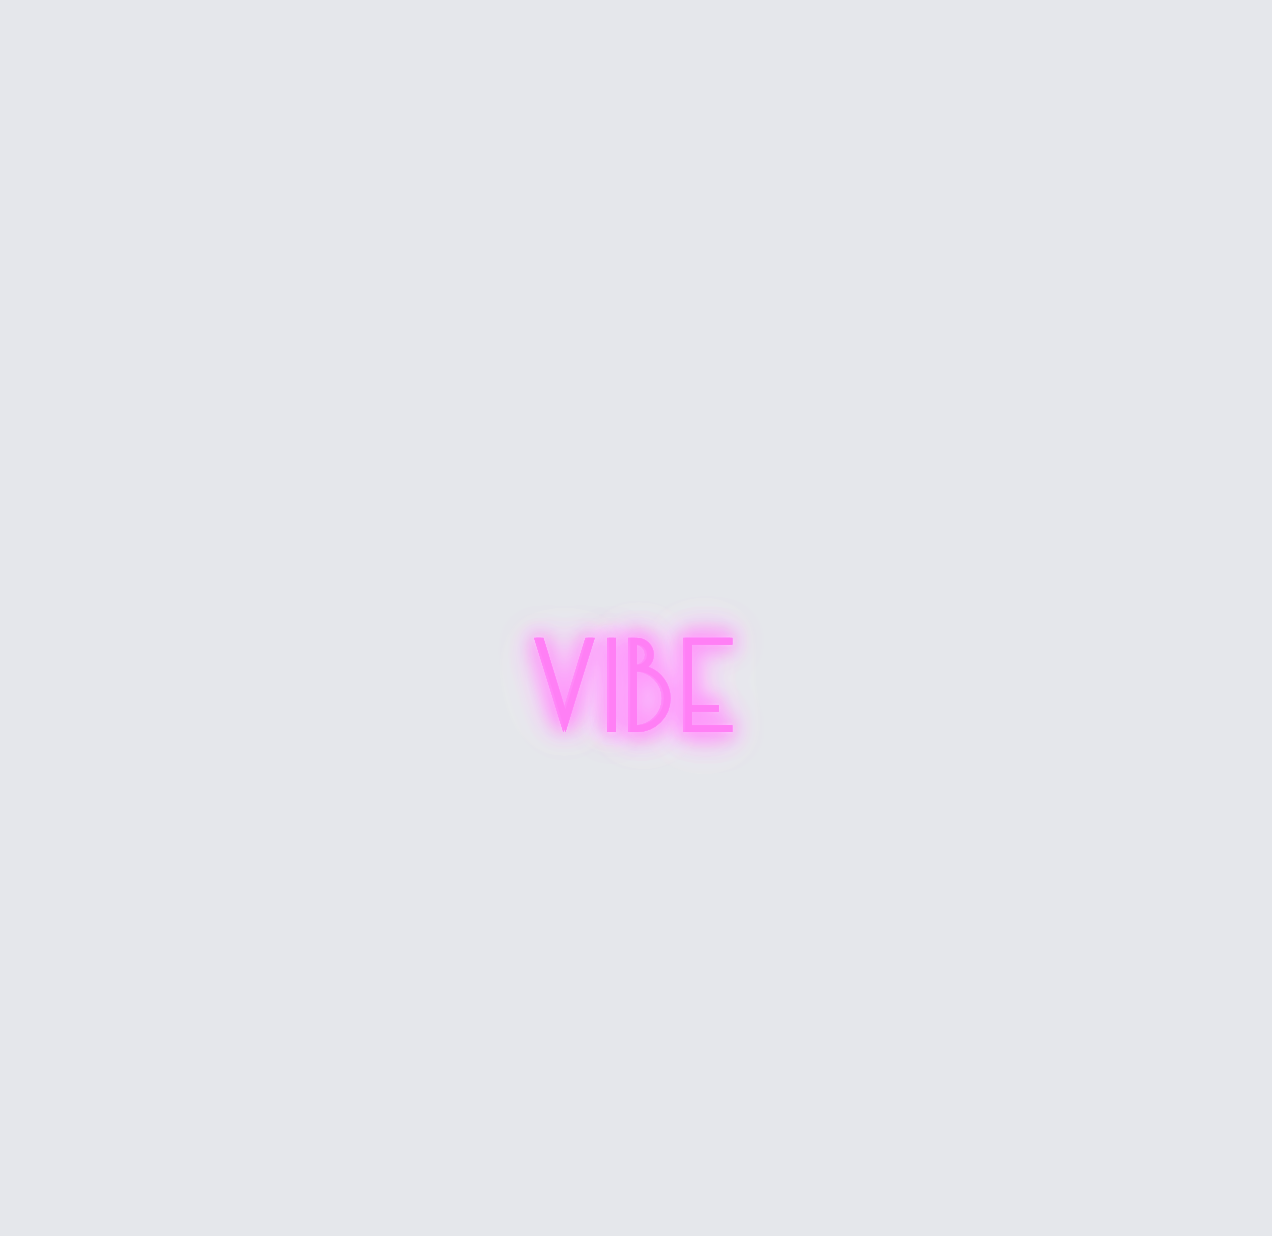 Custom neon sign - Vibe